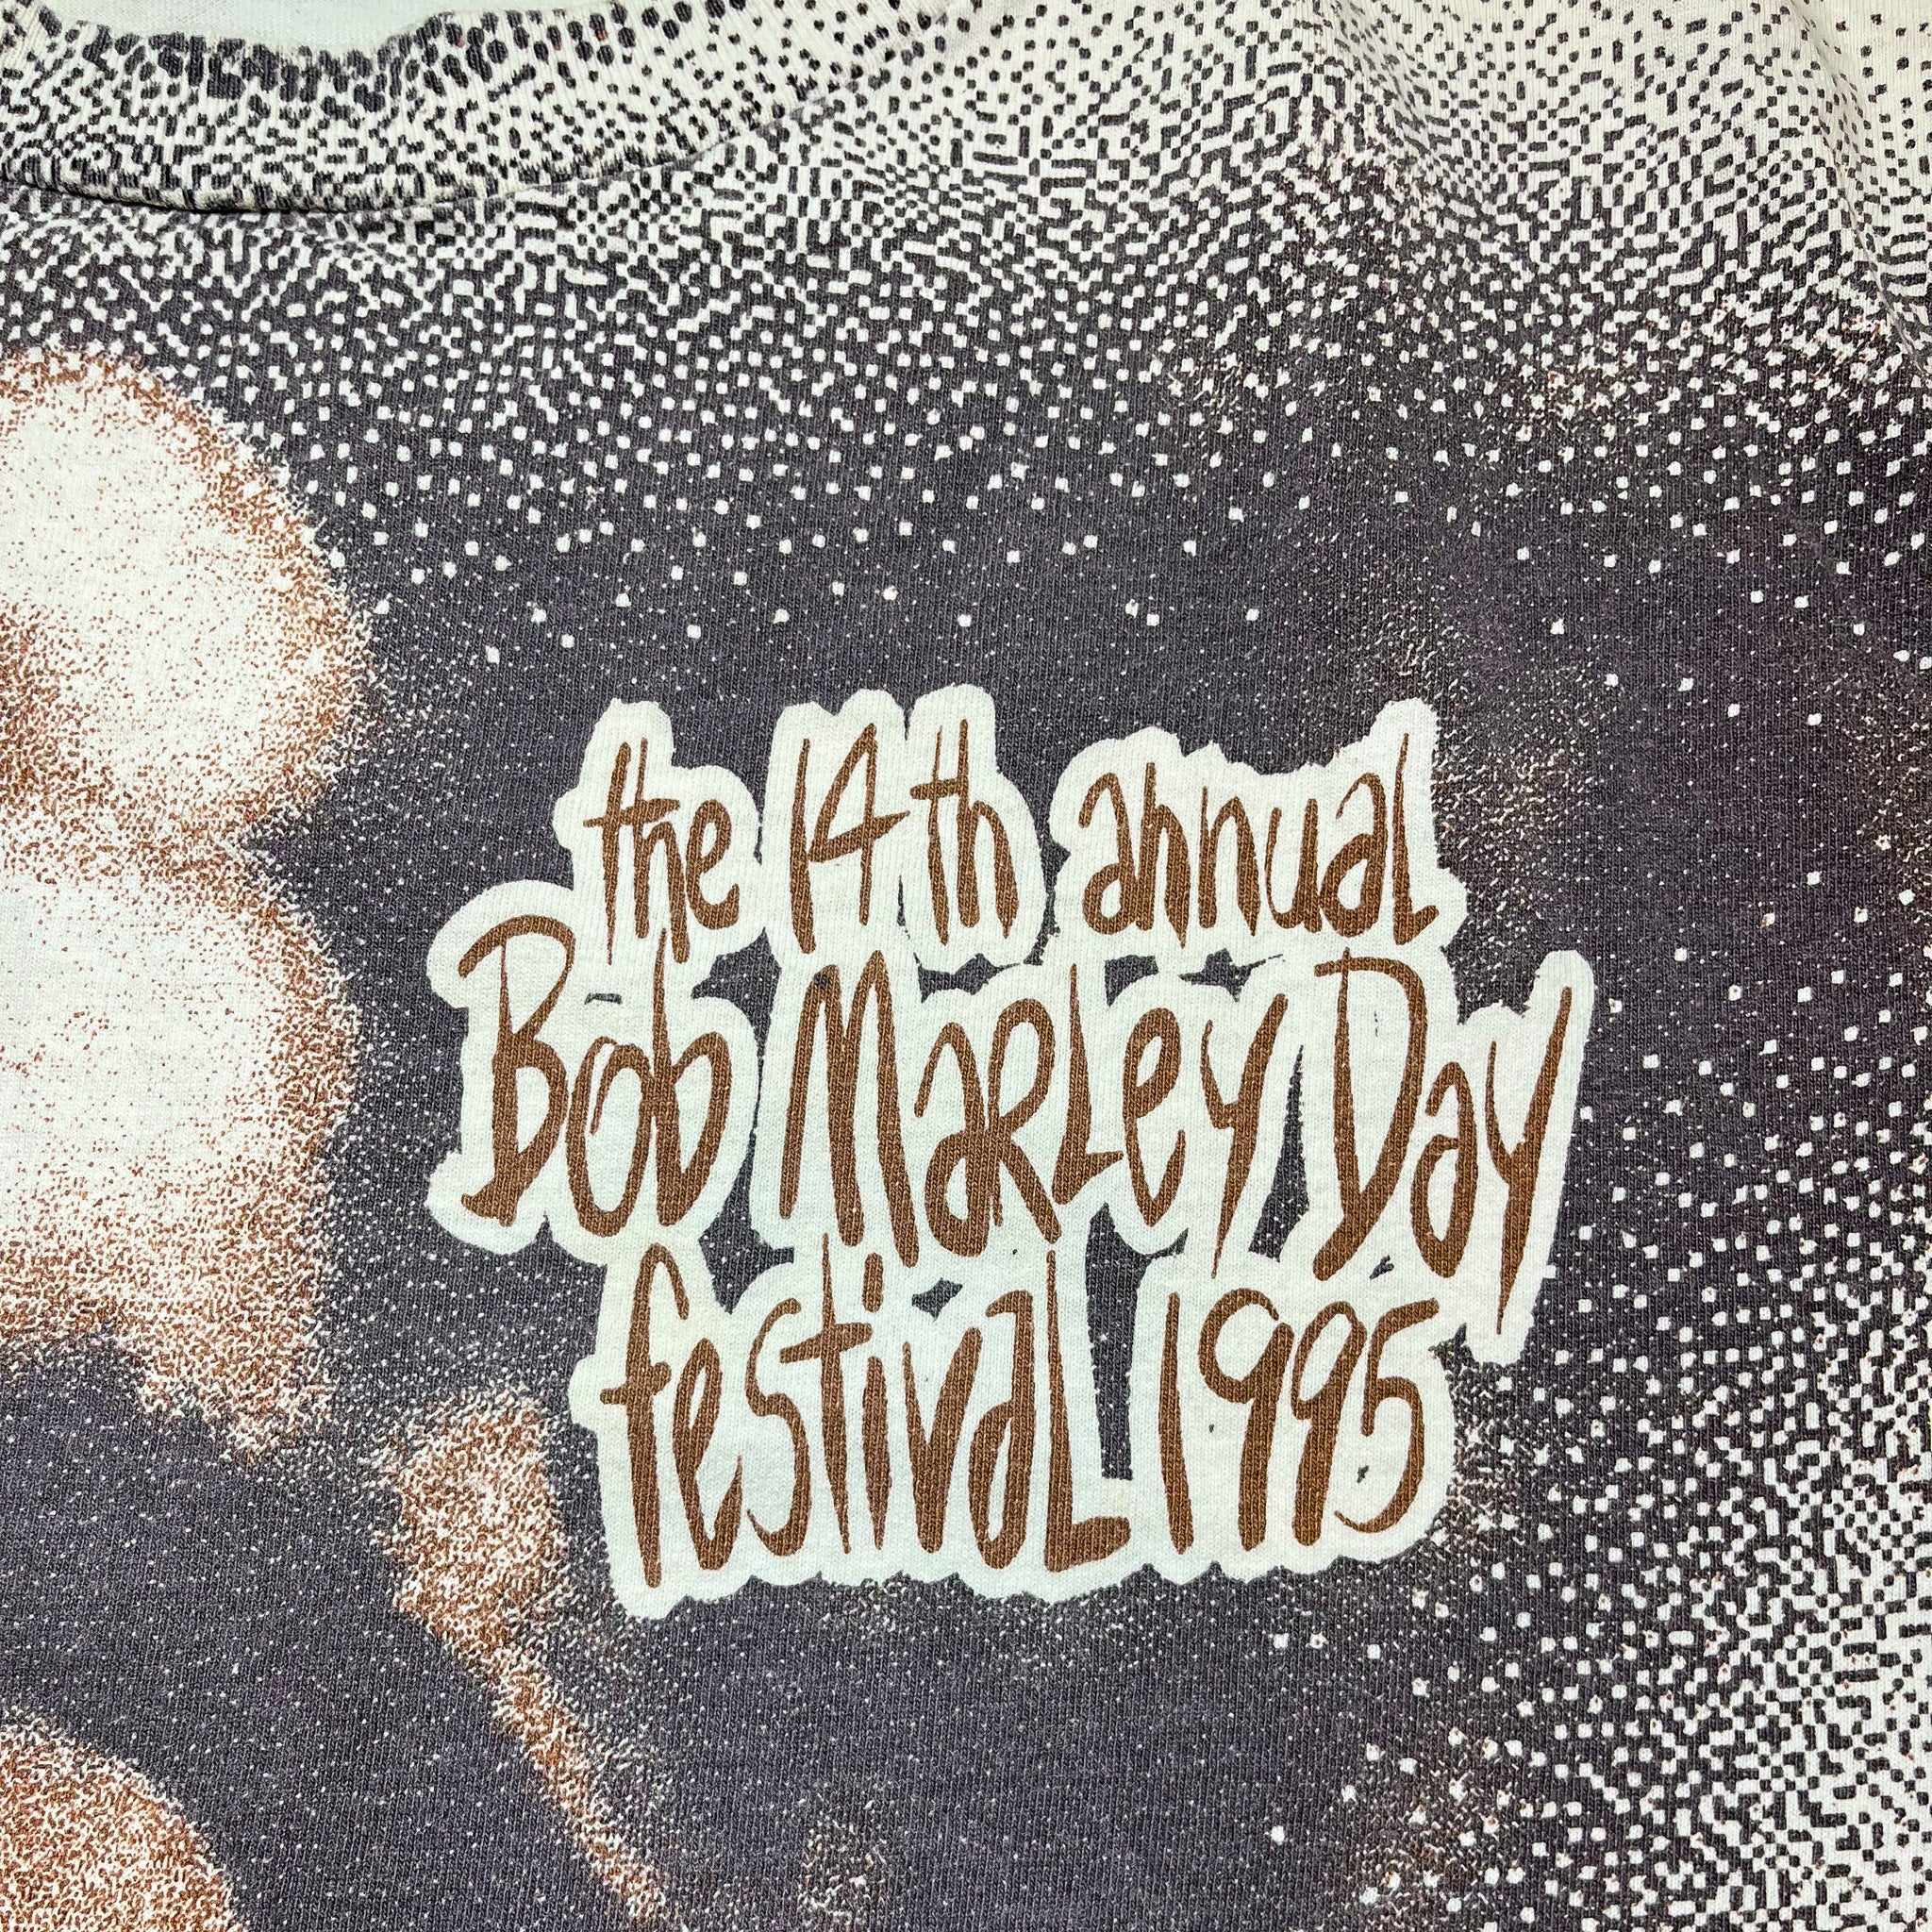 Bob Marley Vintage Tee - Festival 1995